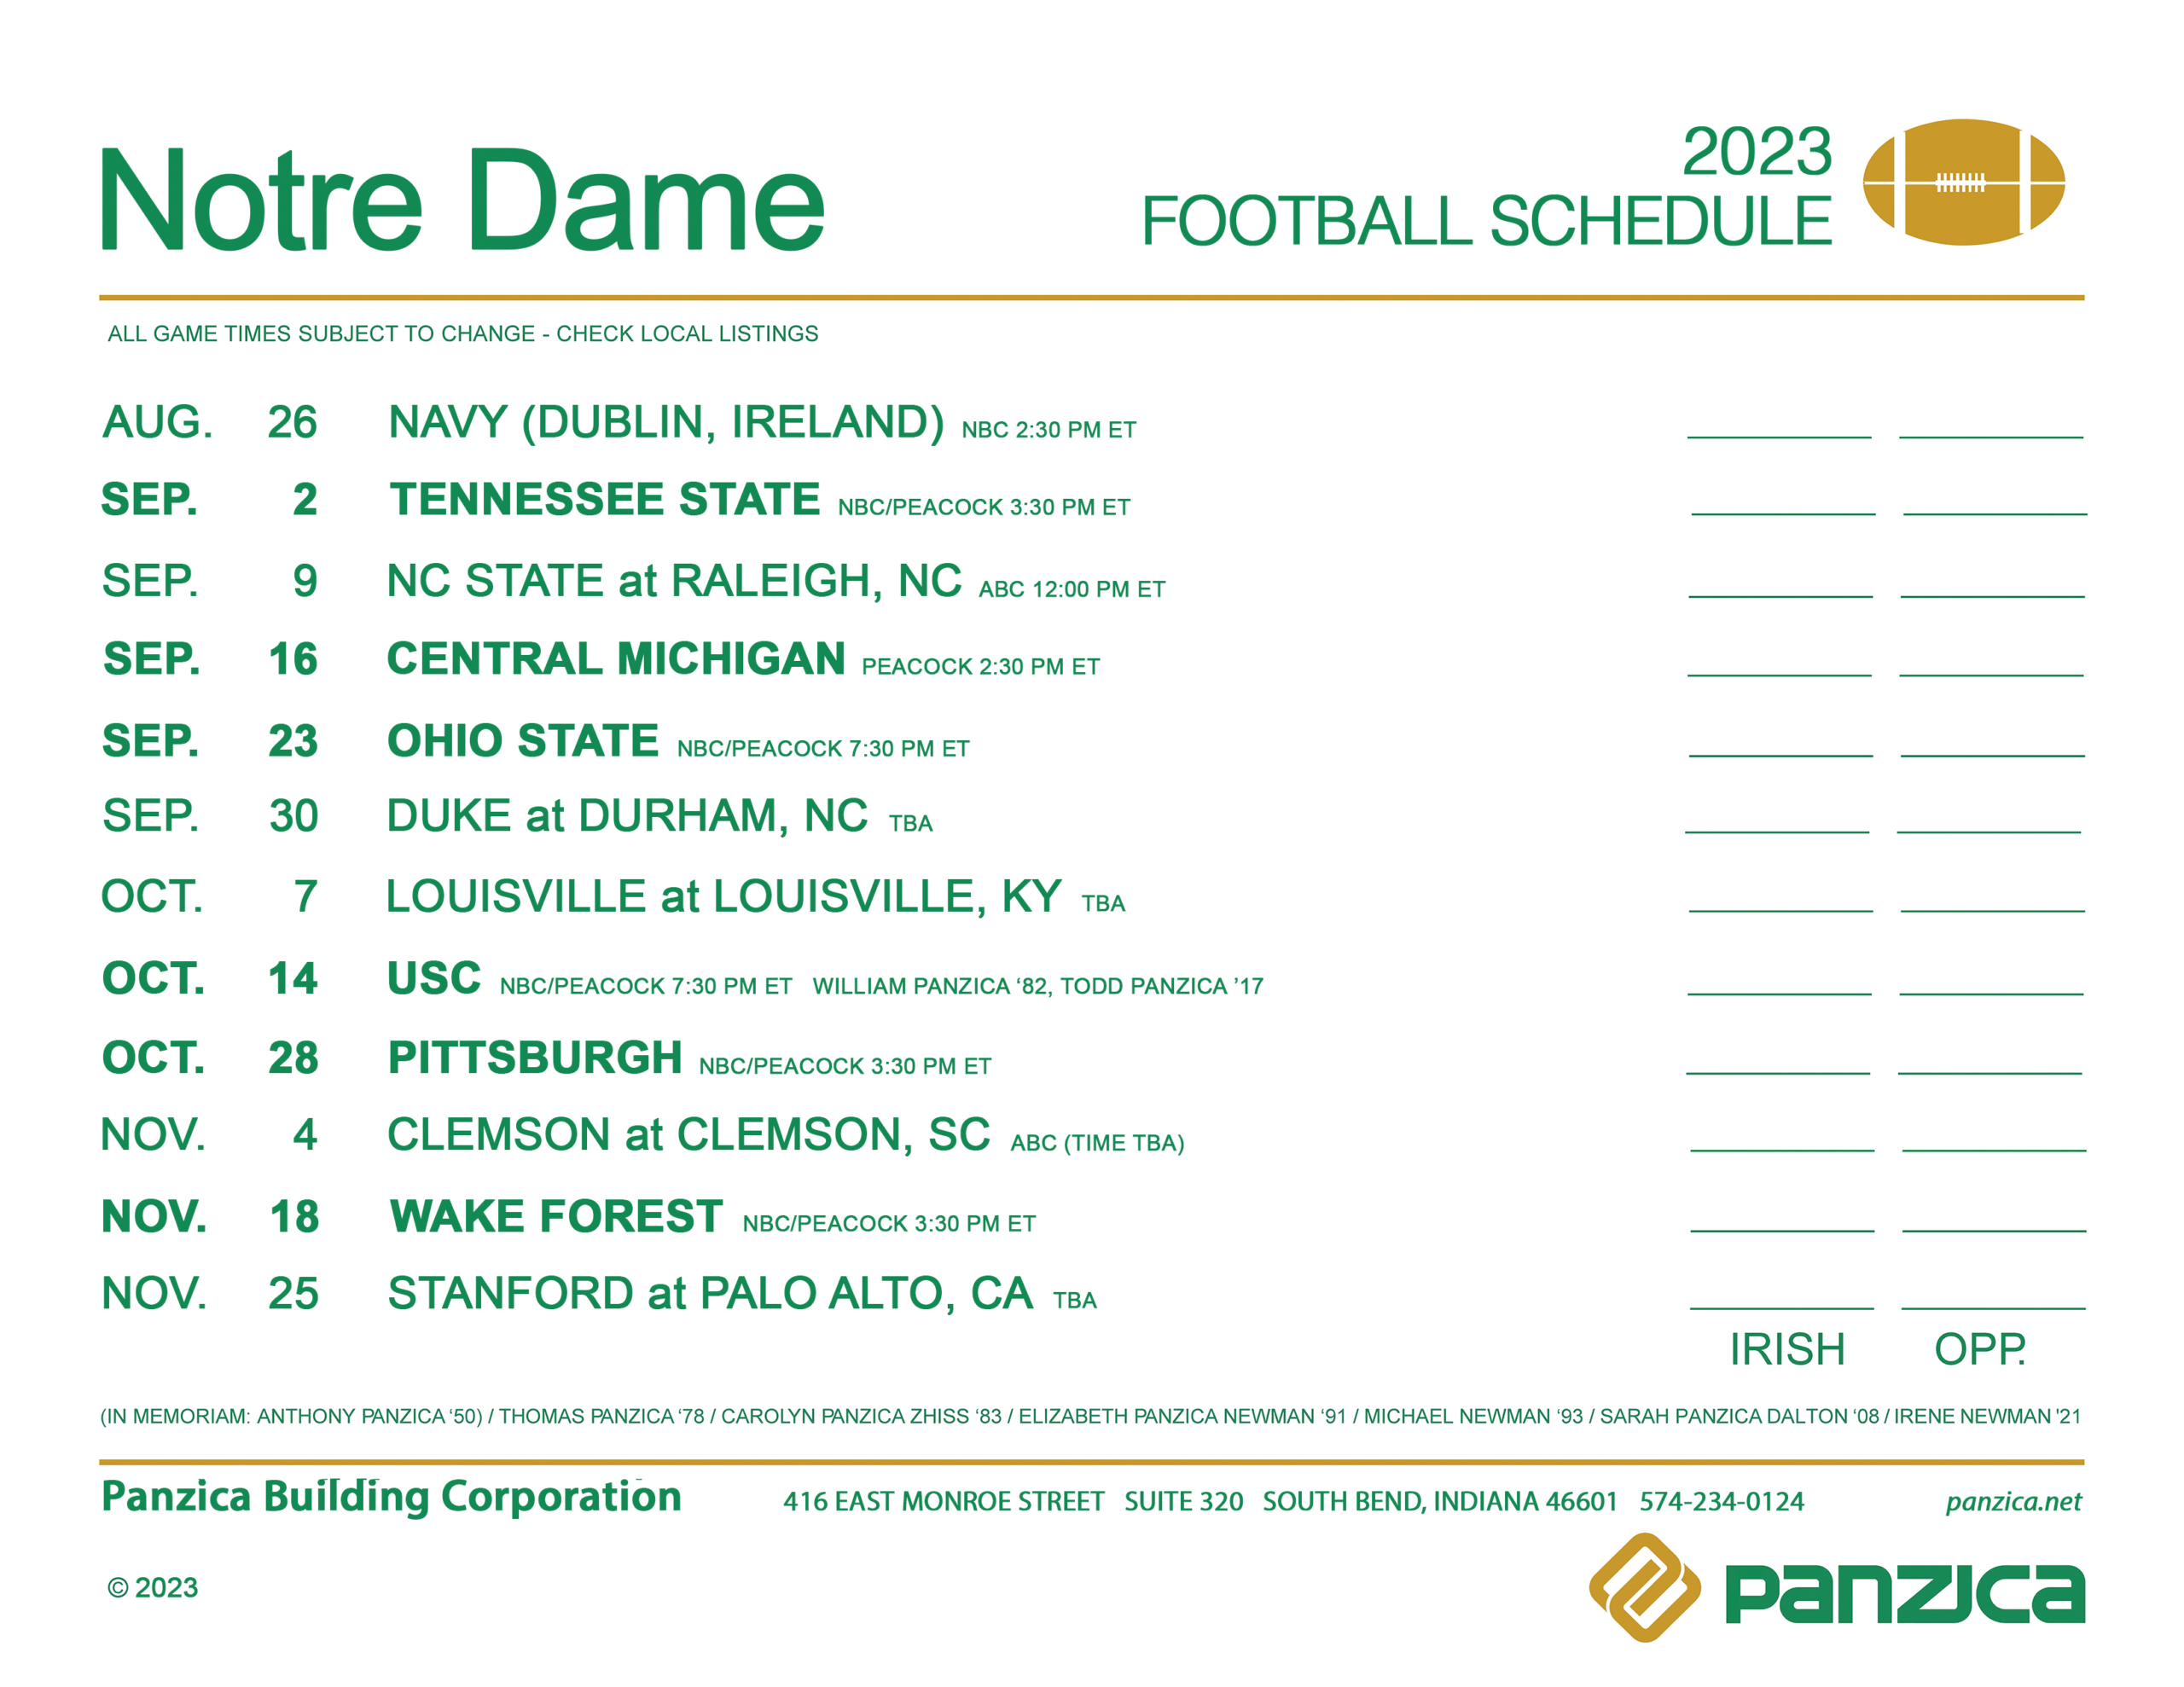 Notre Dame Football Schedule - Panzica Building Corporation